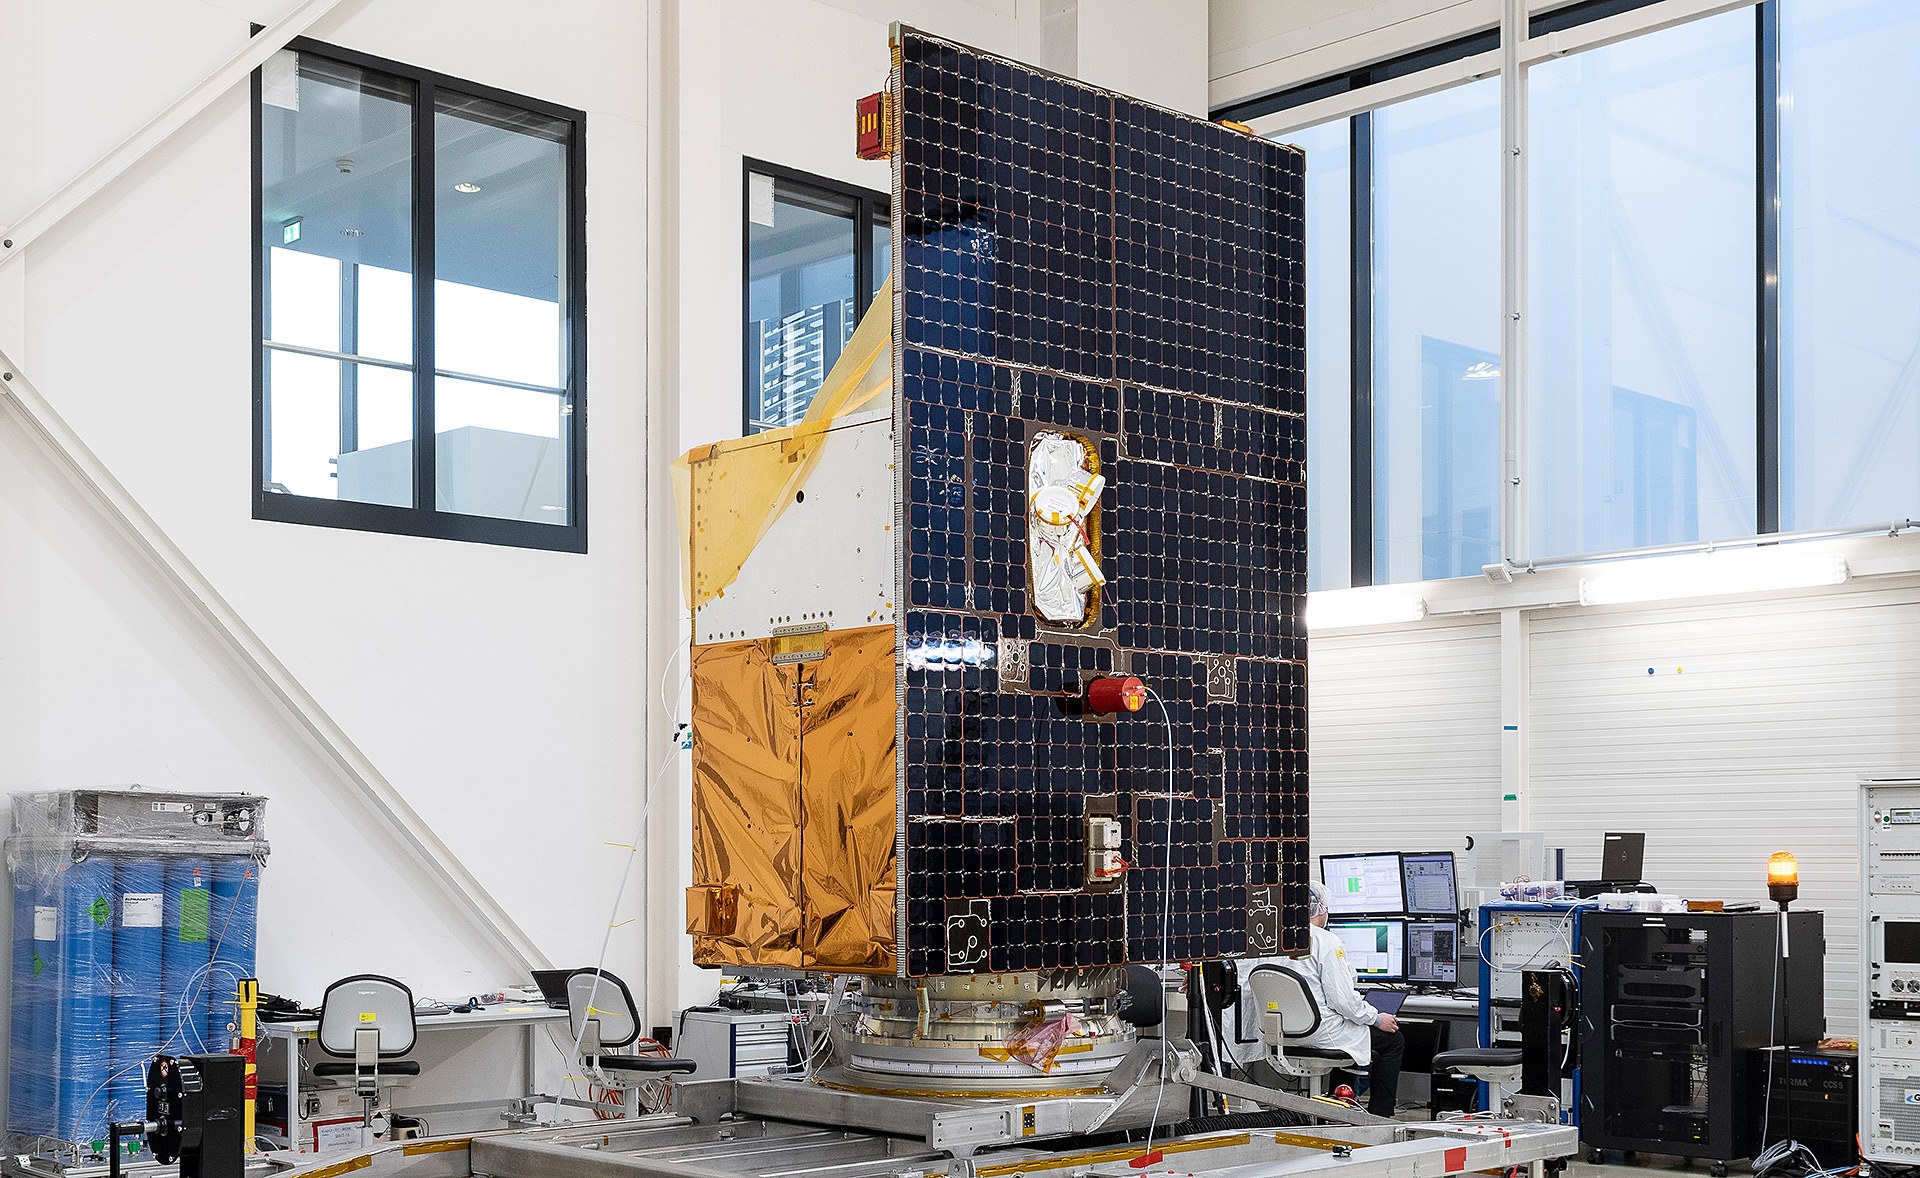 The German EnMAP environmental satellite